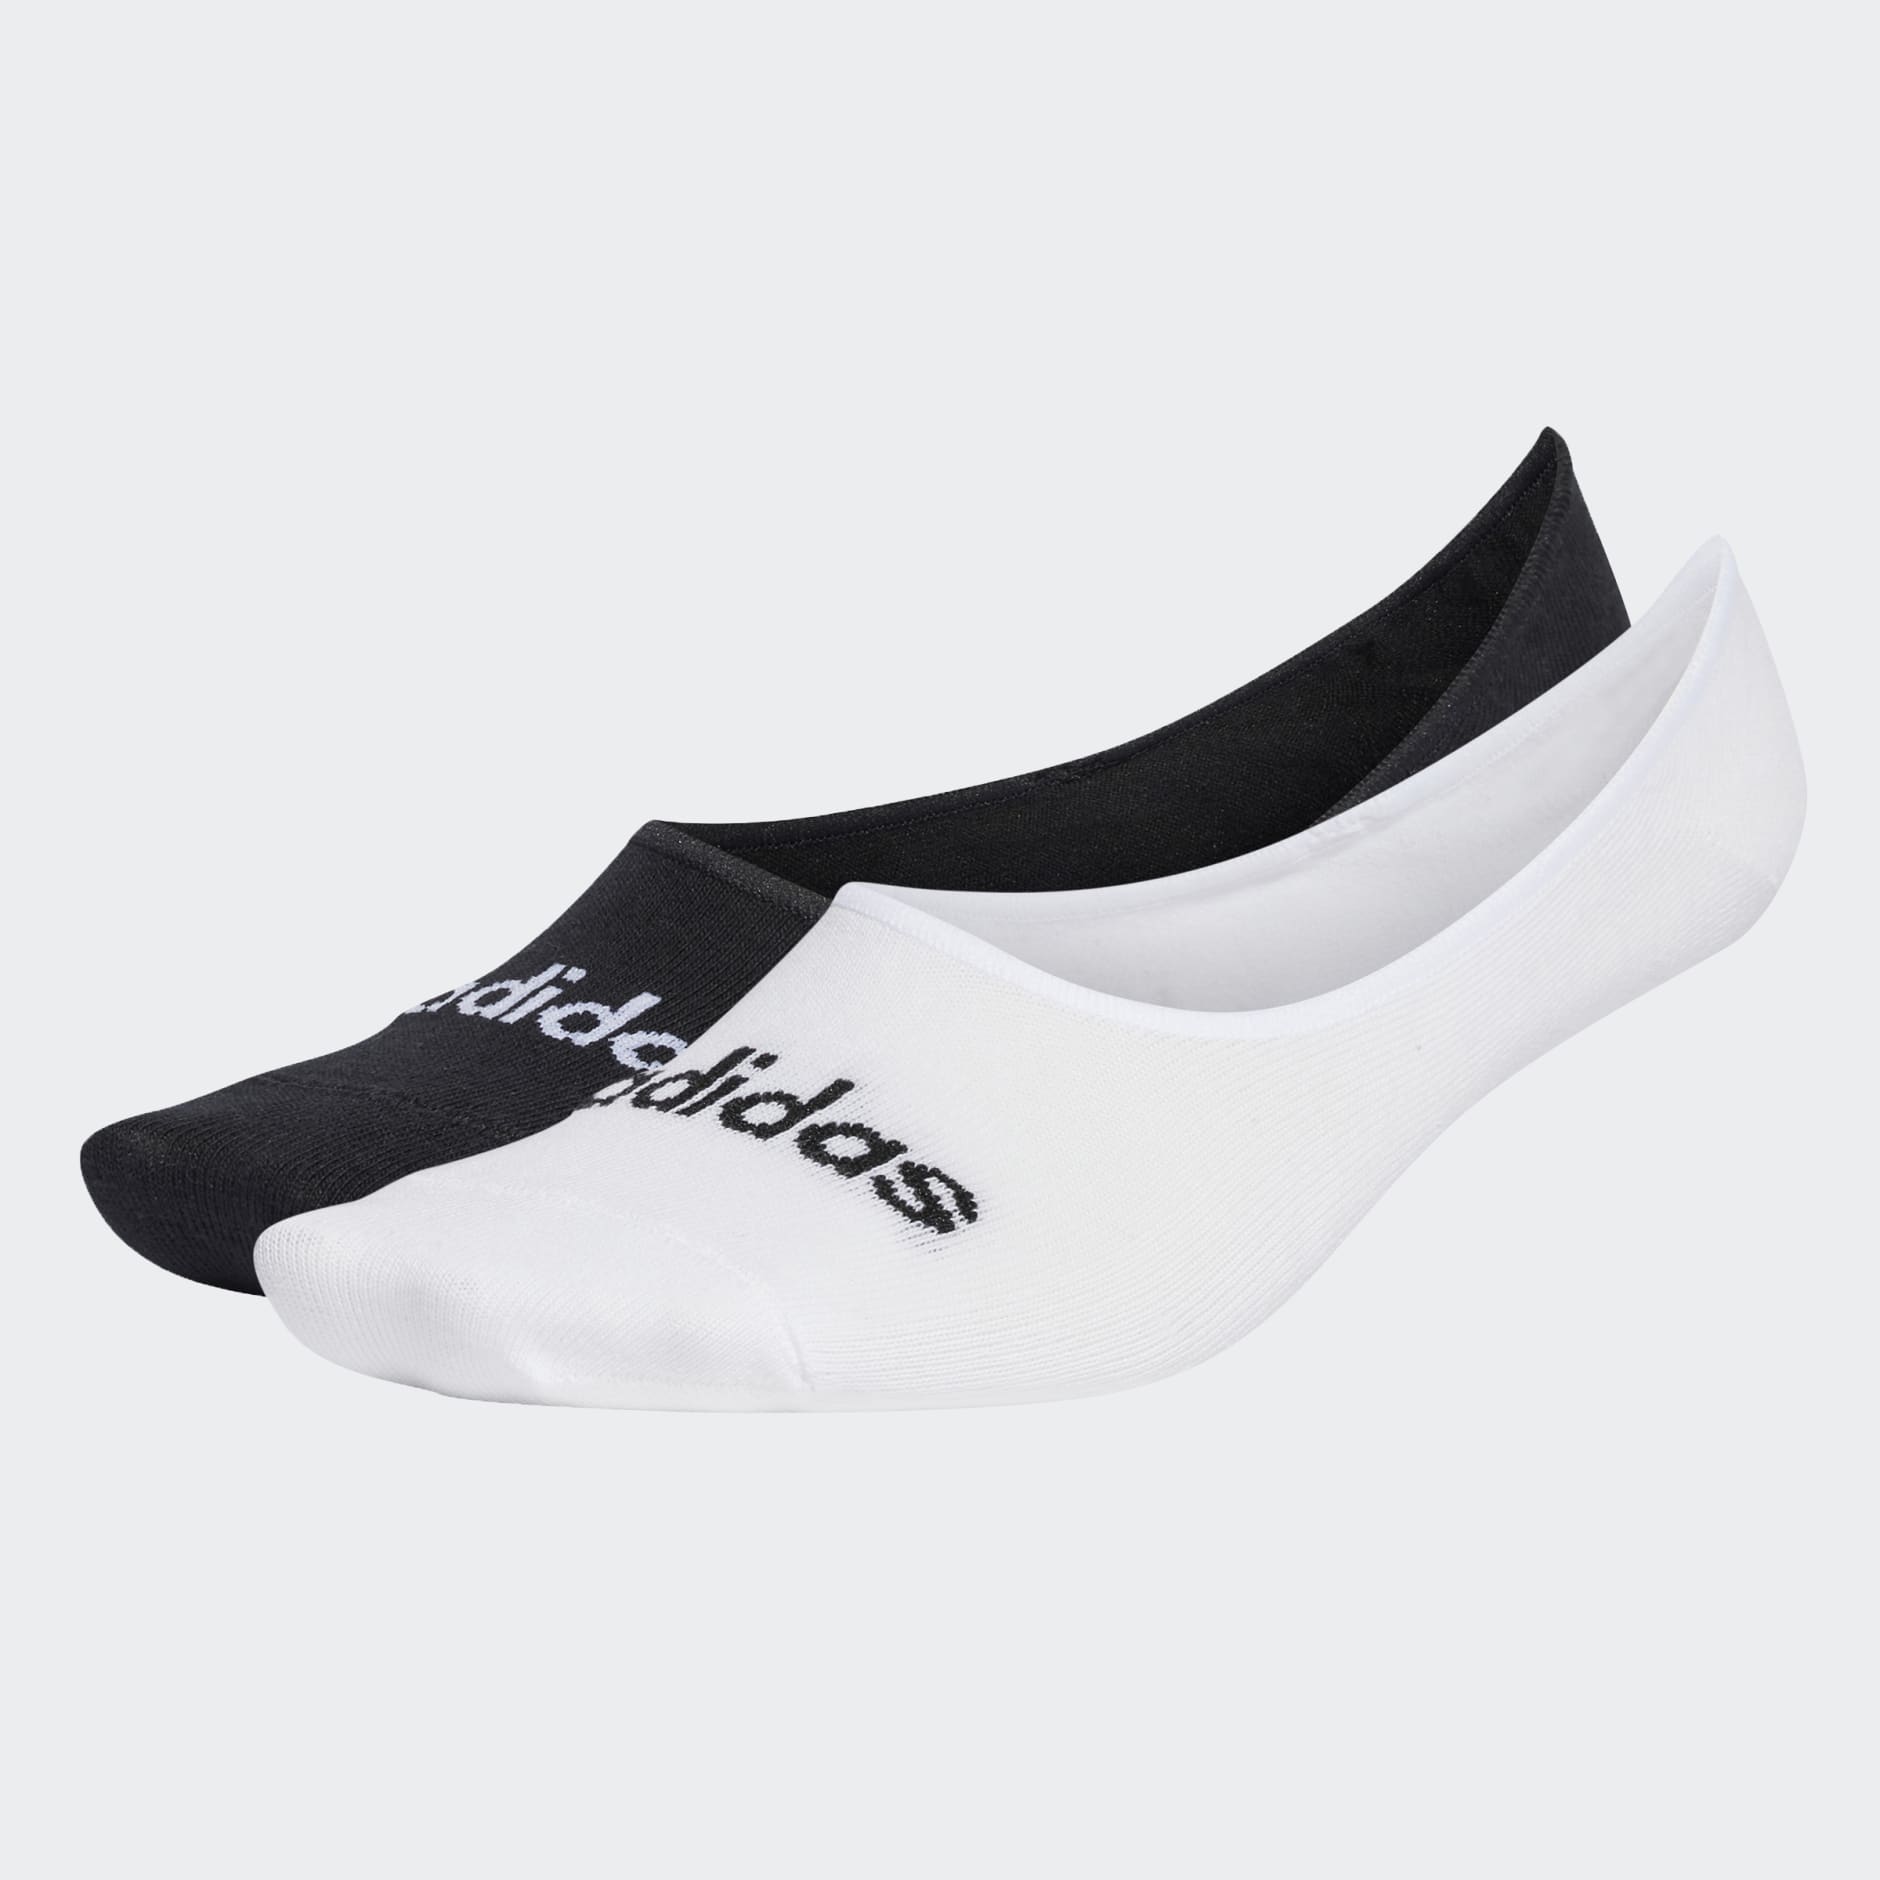 Accessories - Thin Linear Ballerina Socks 2 Pairs - White